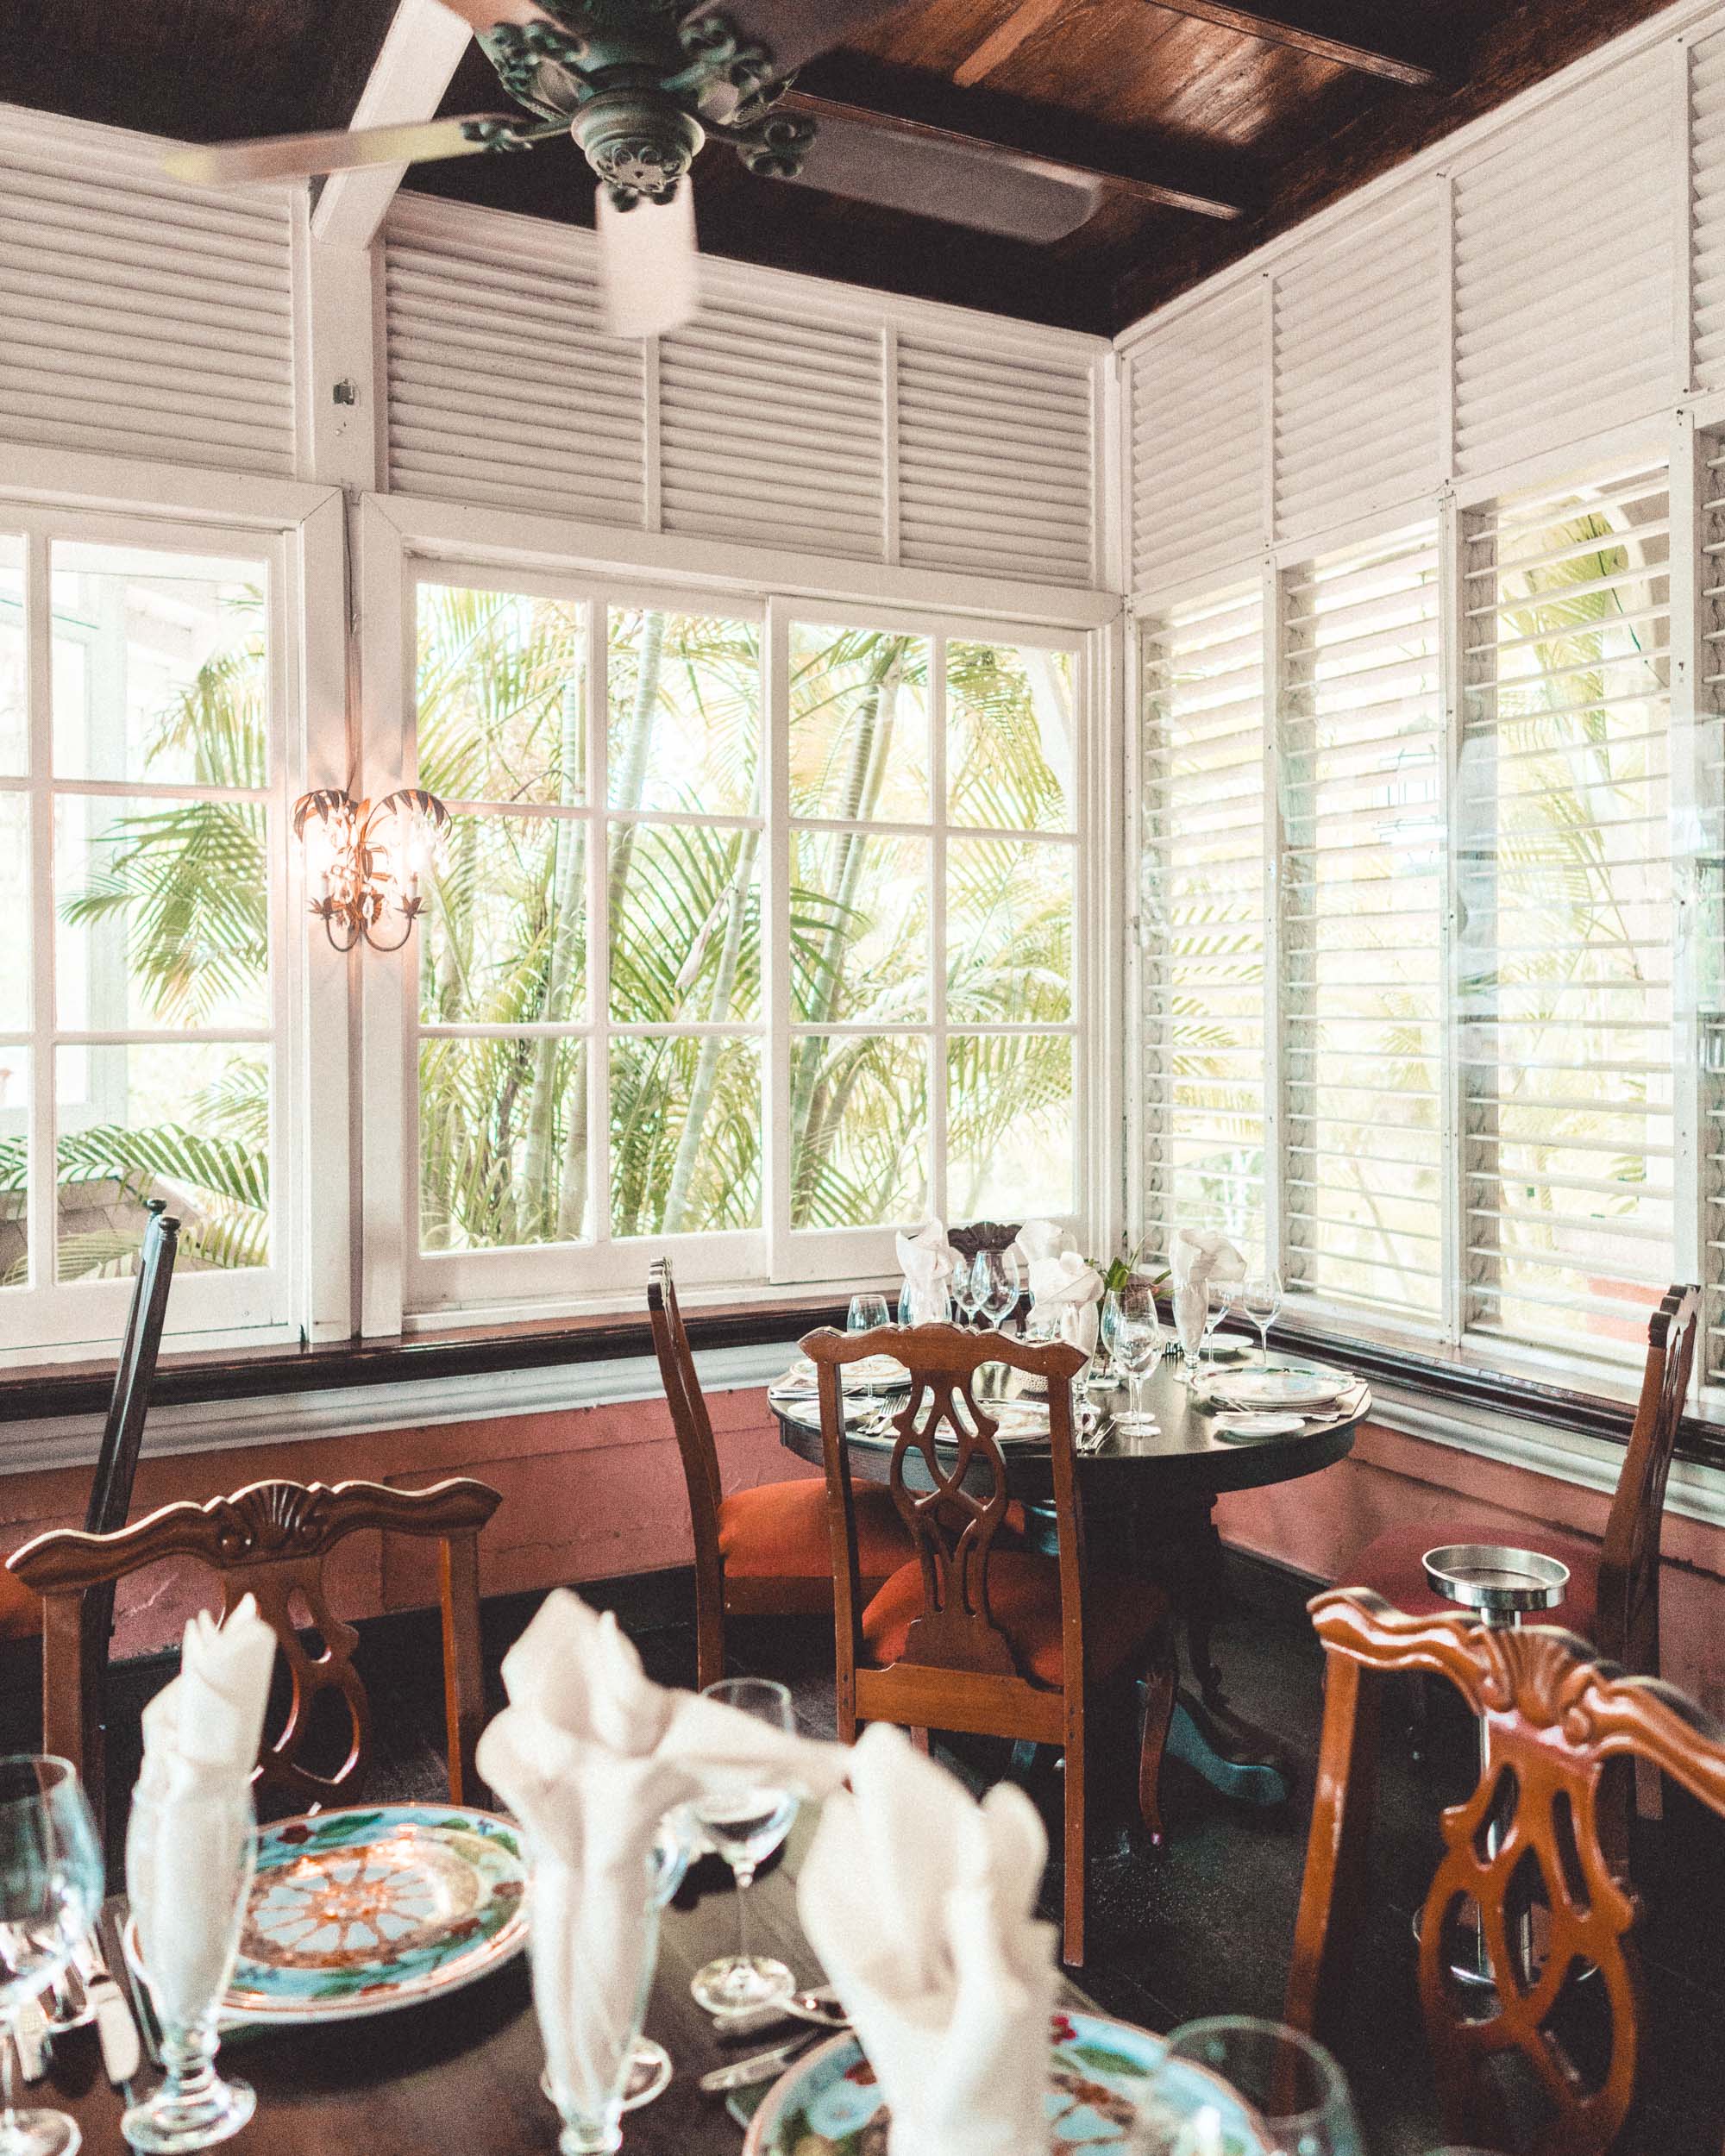 Graycliff restaurant and hotel in Nassau Bahamas